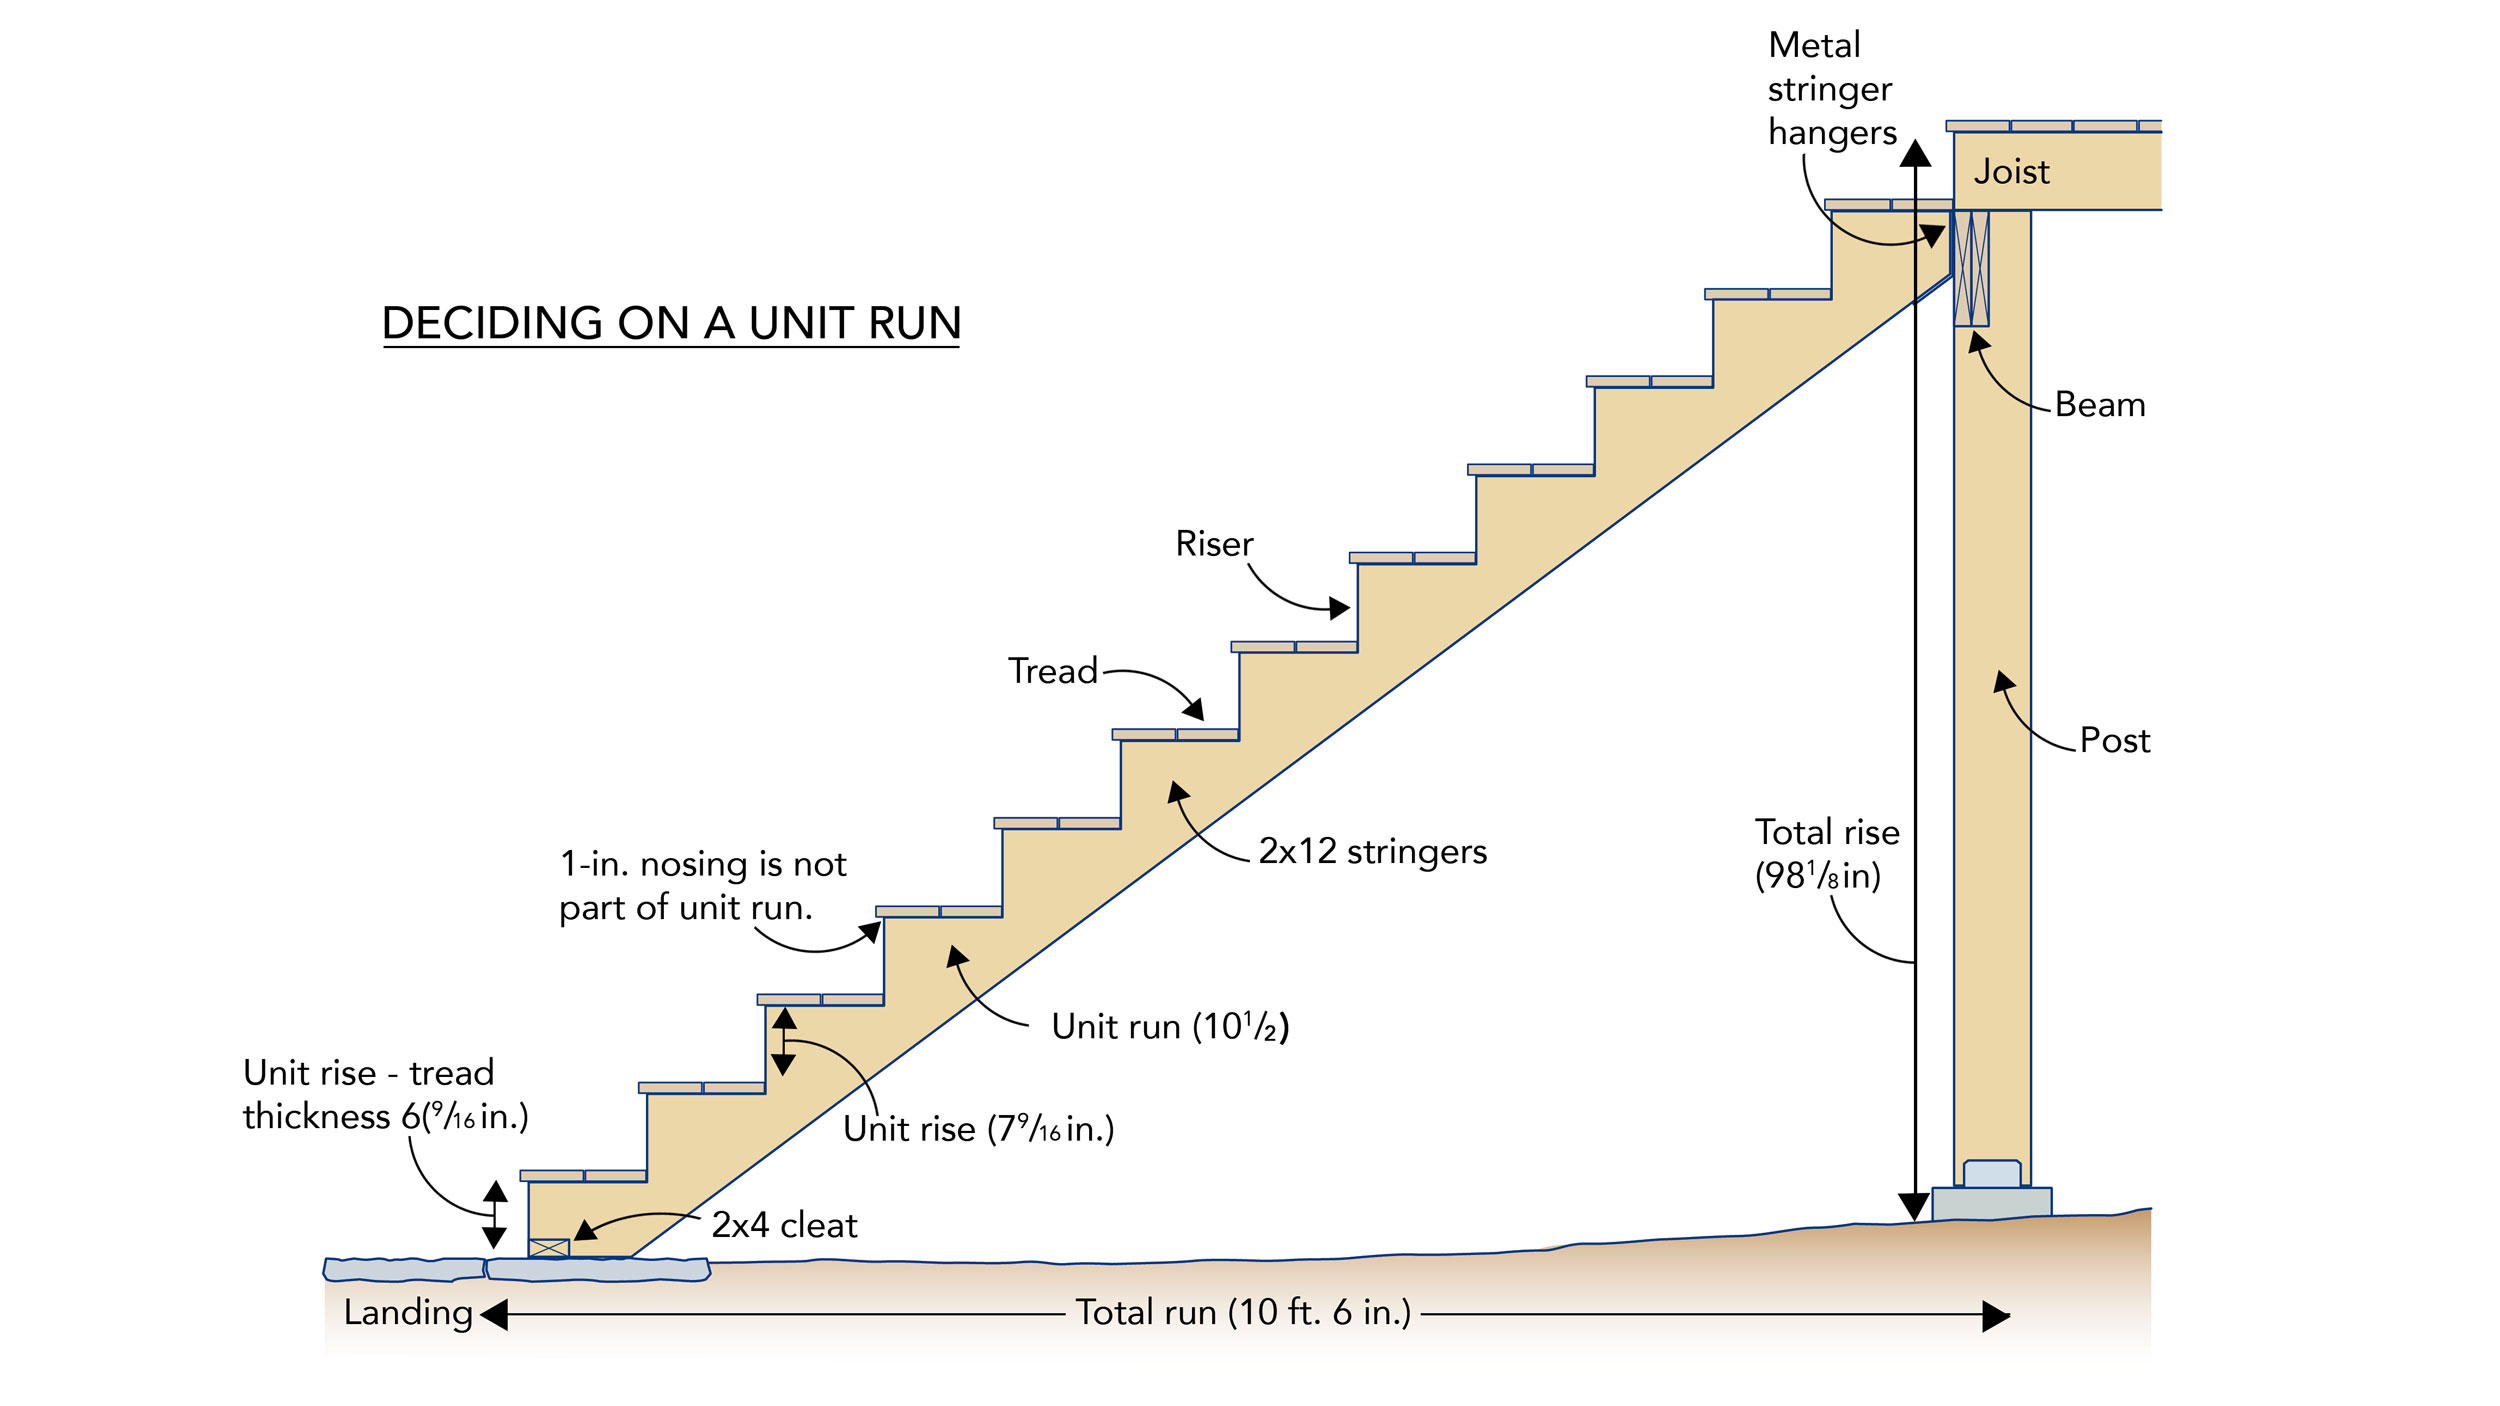 Stair Calculator - Calculate stair rise and run